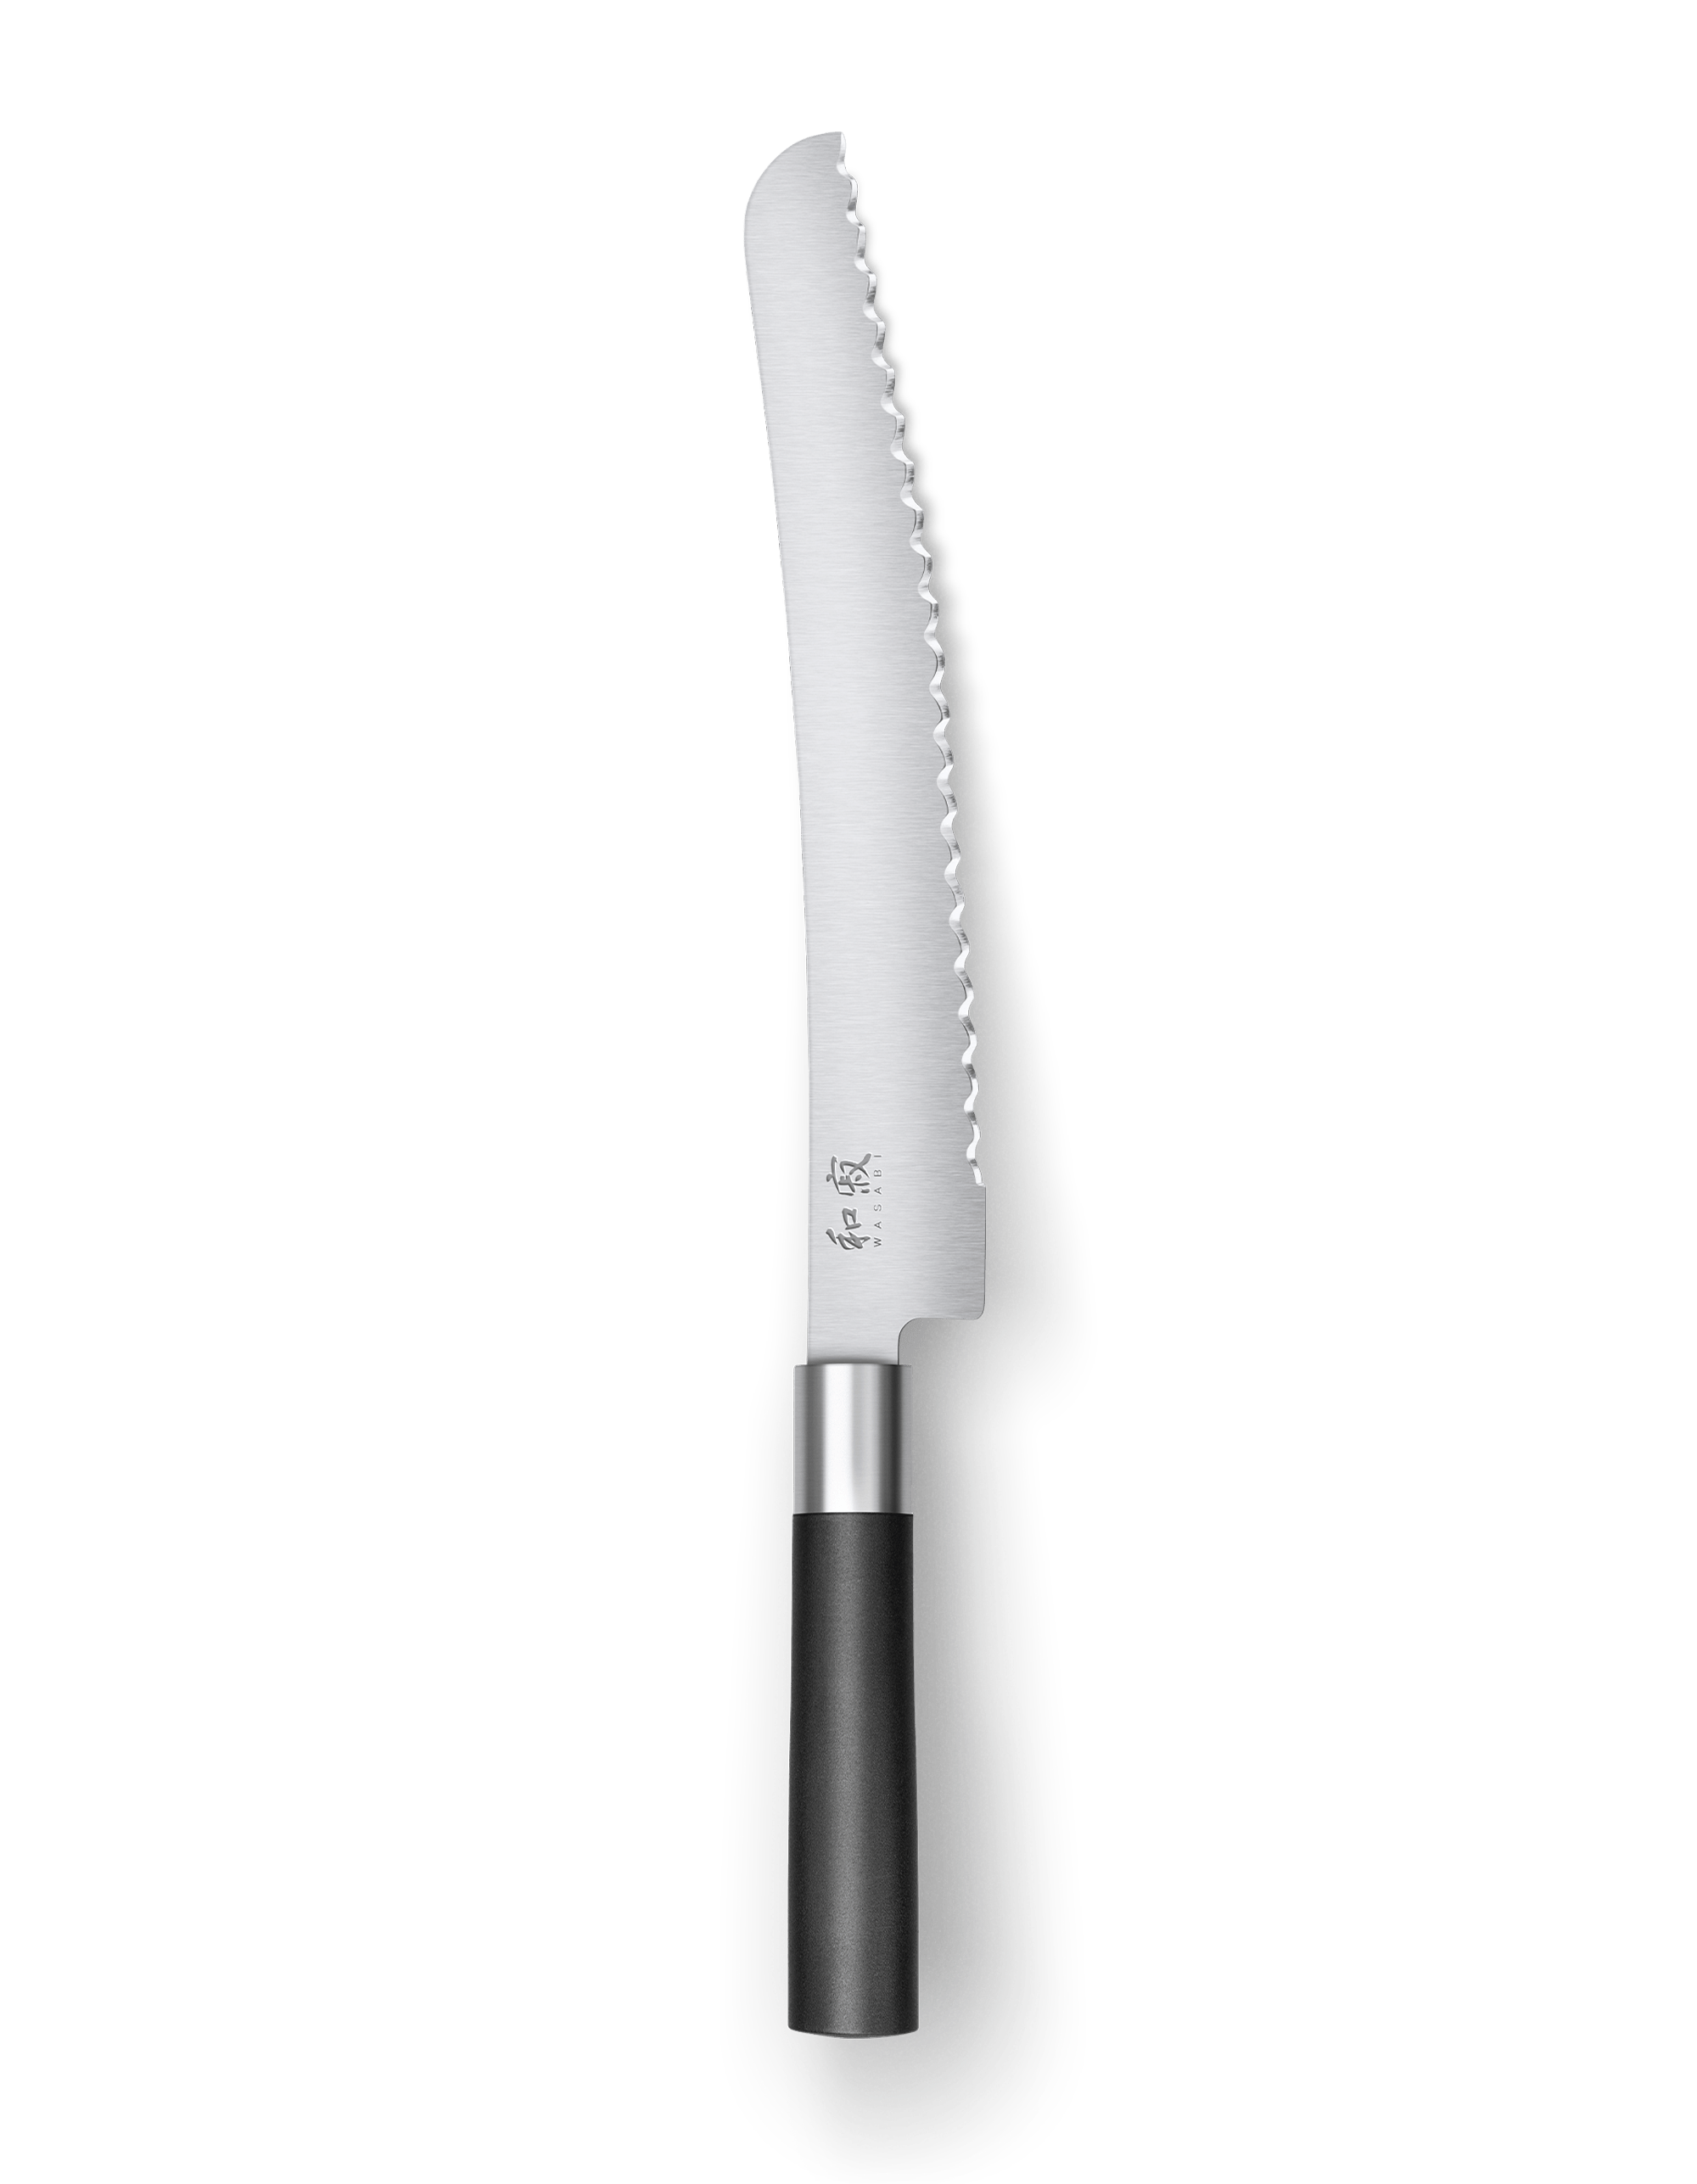 Kai Wasabi Knife Set 67S-300 Black